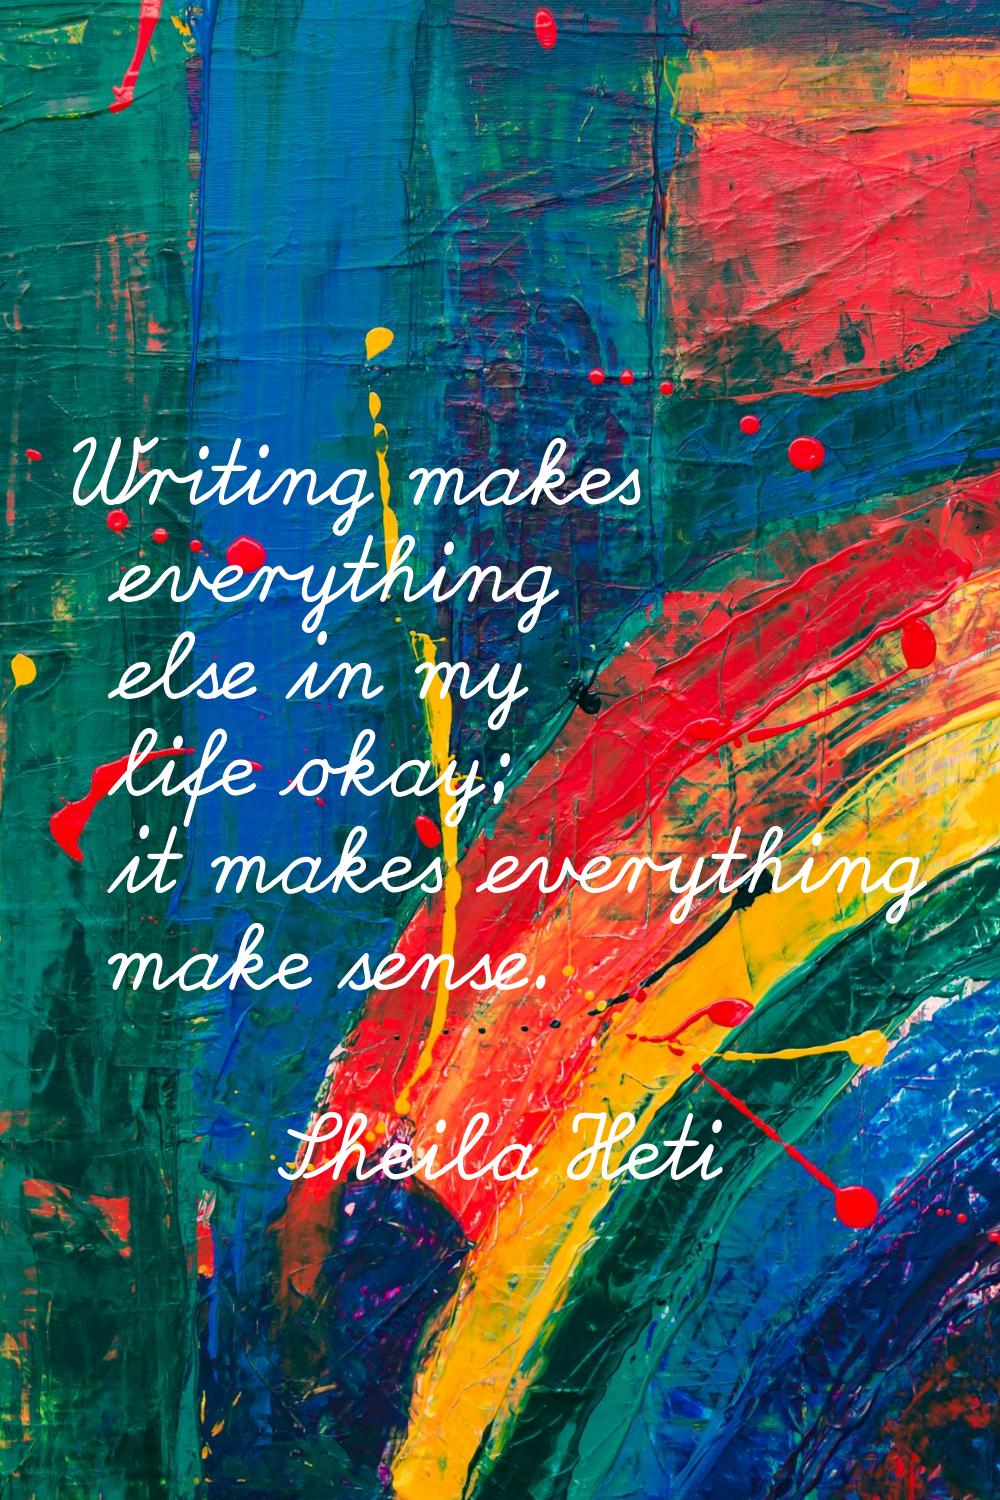 Writing makes everything else in my life okay; it makes everything make sense.